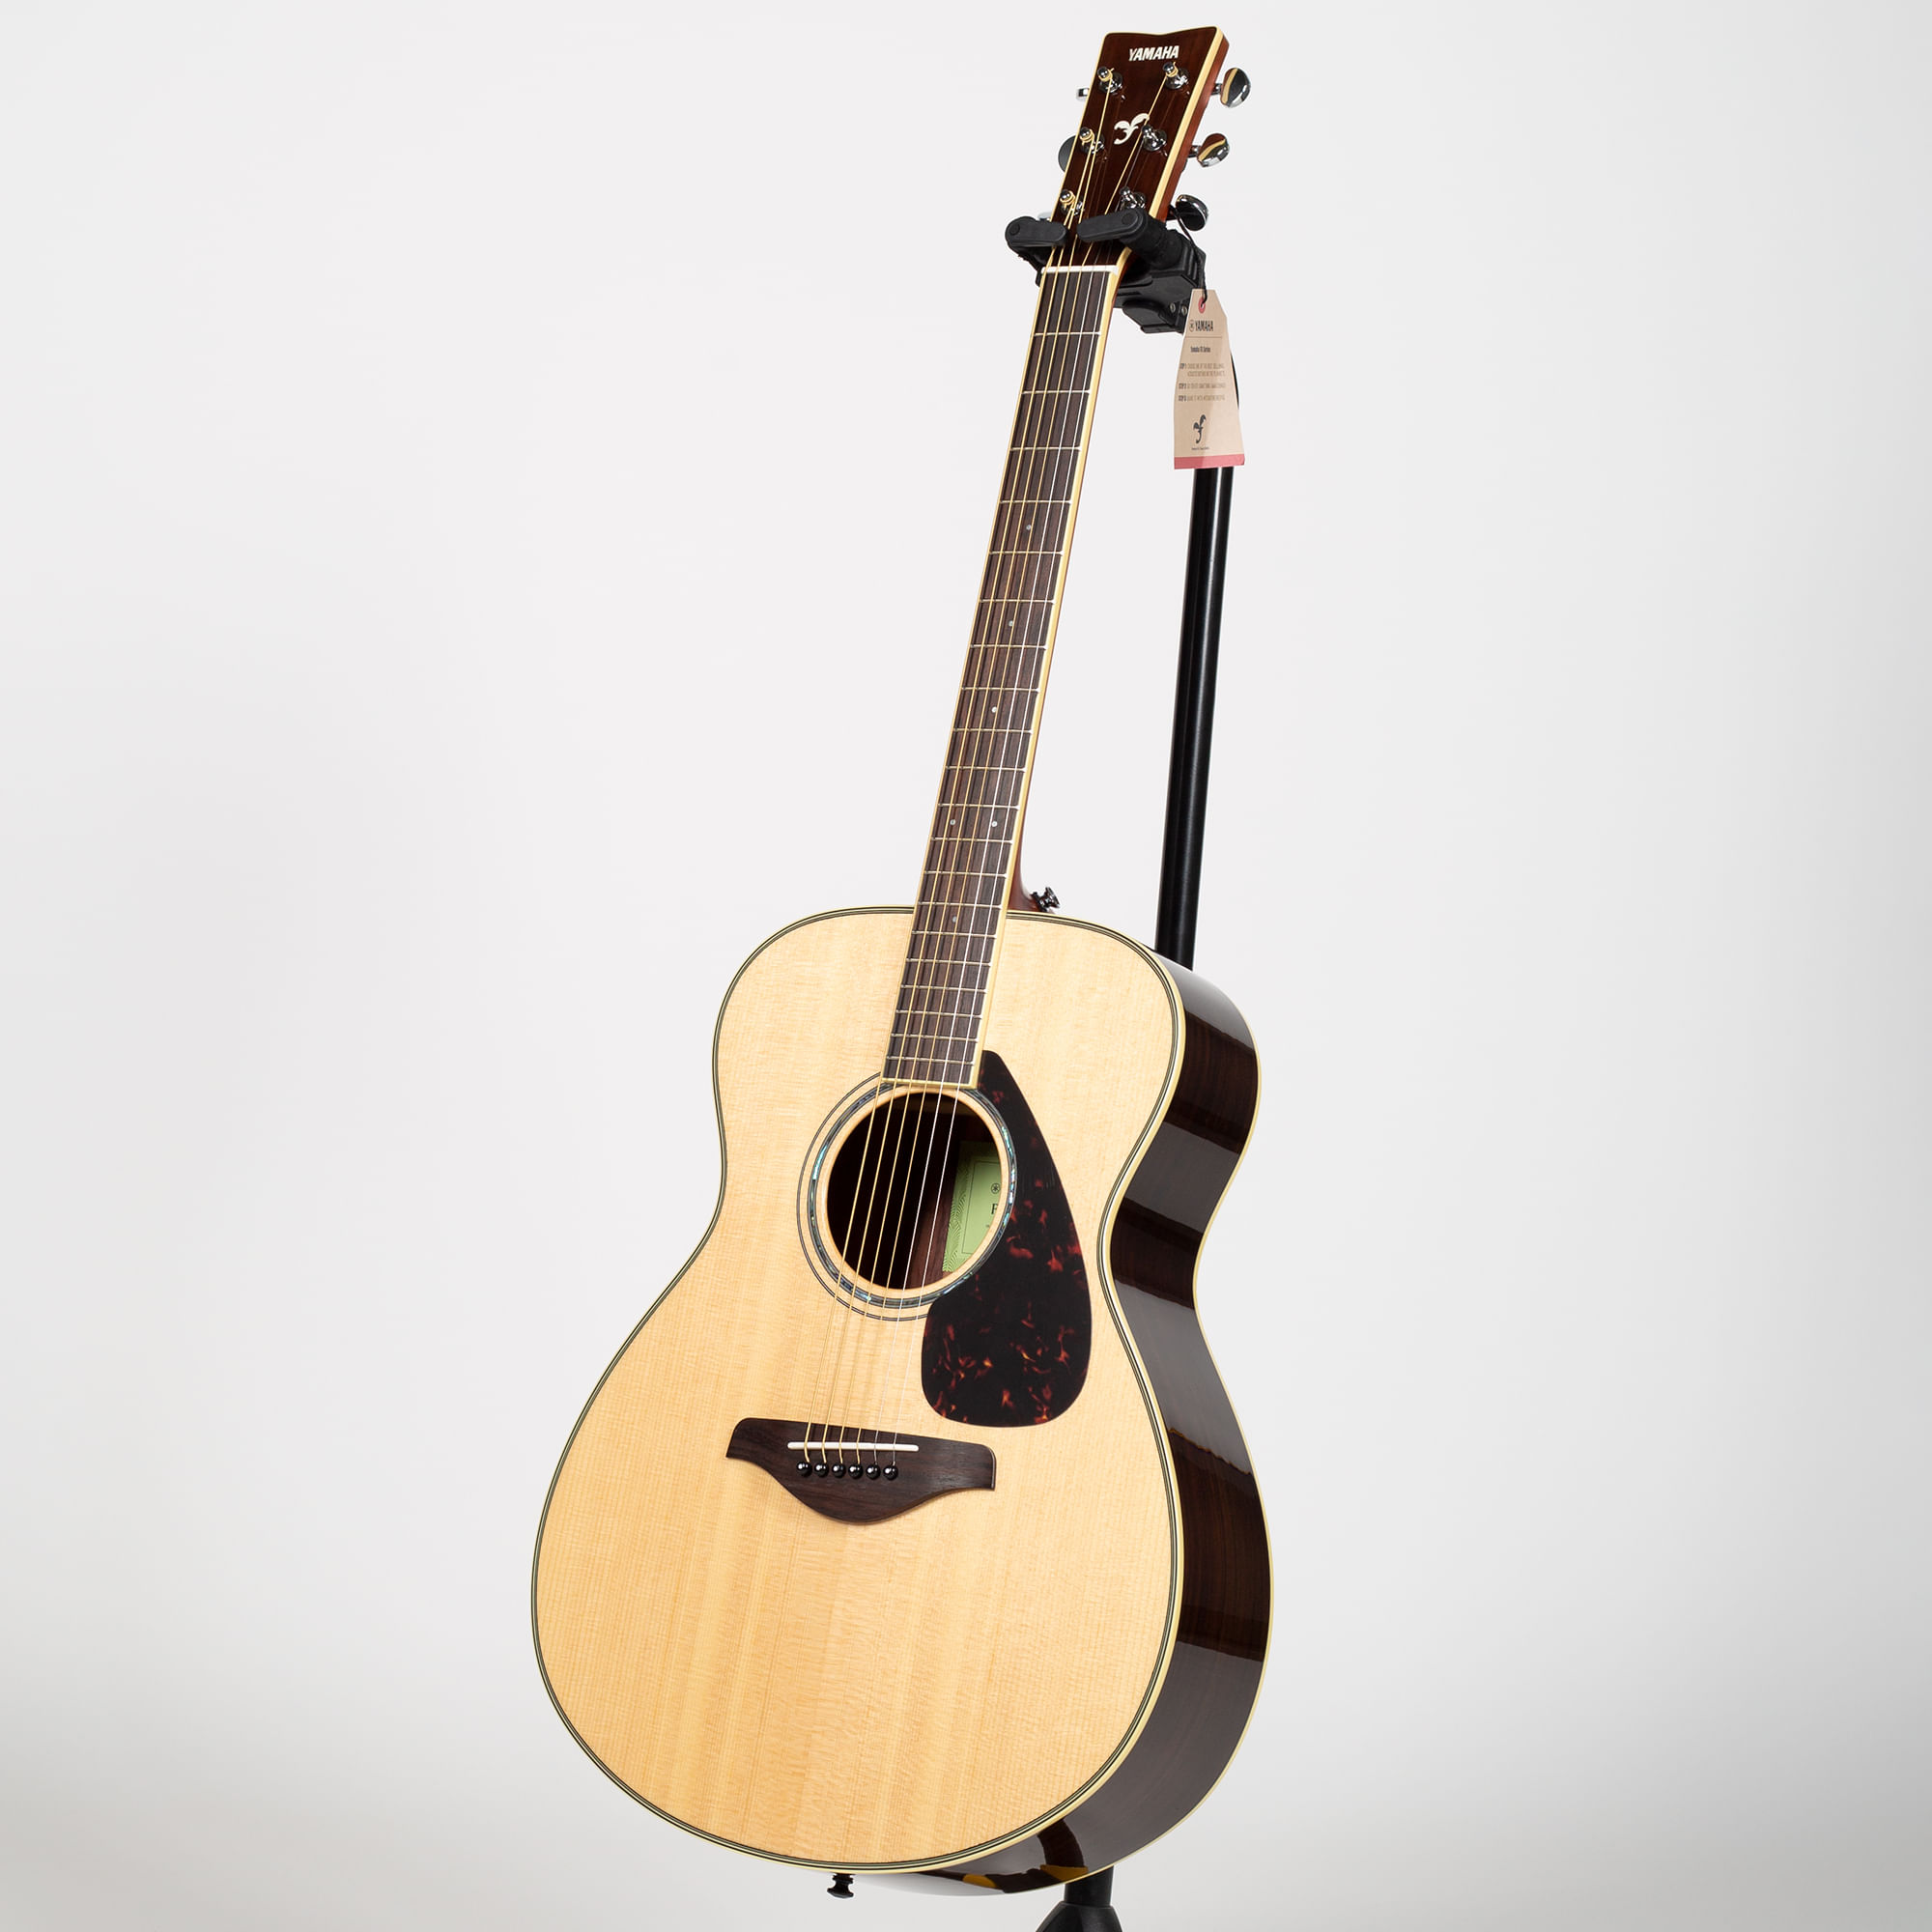 Yamaha FS830 Concert Acoustic Guitar - Natural